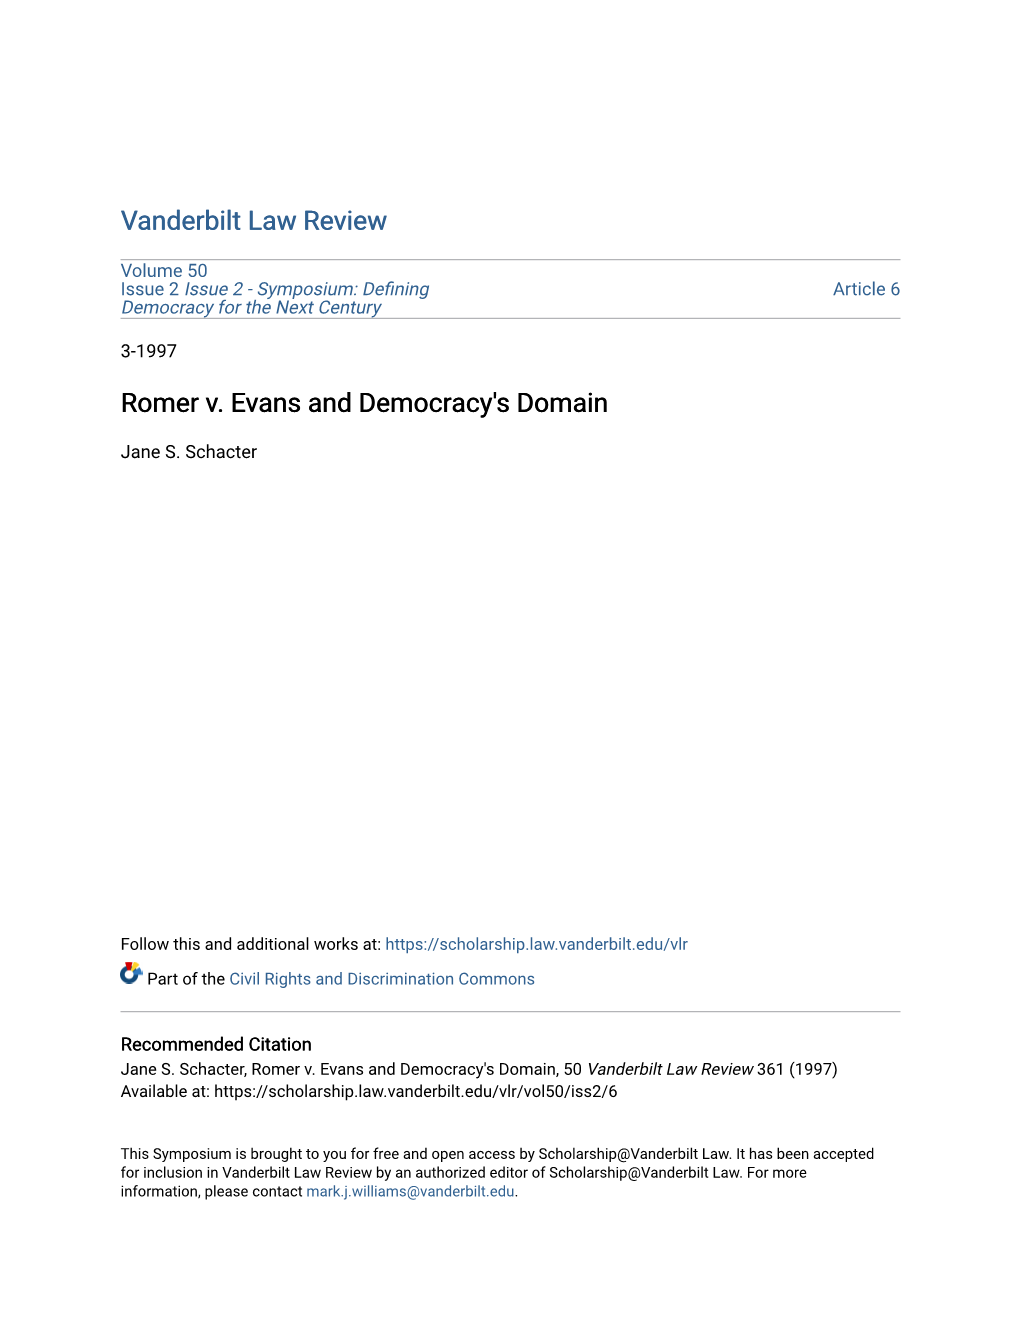 Romer V. Evans and Democracy's Domain